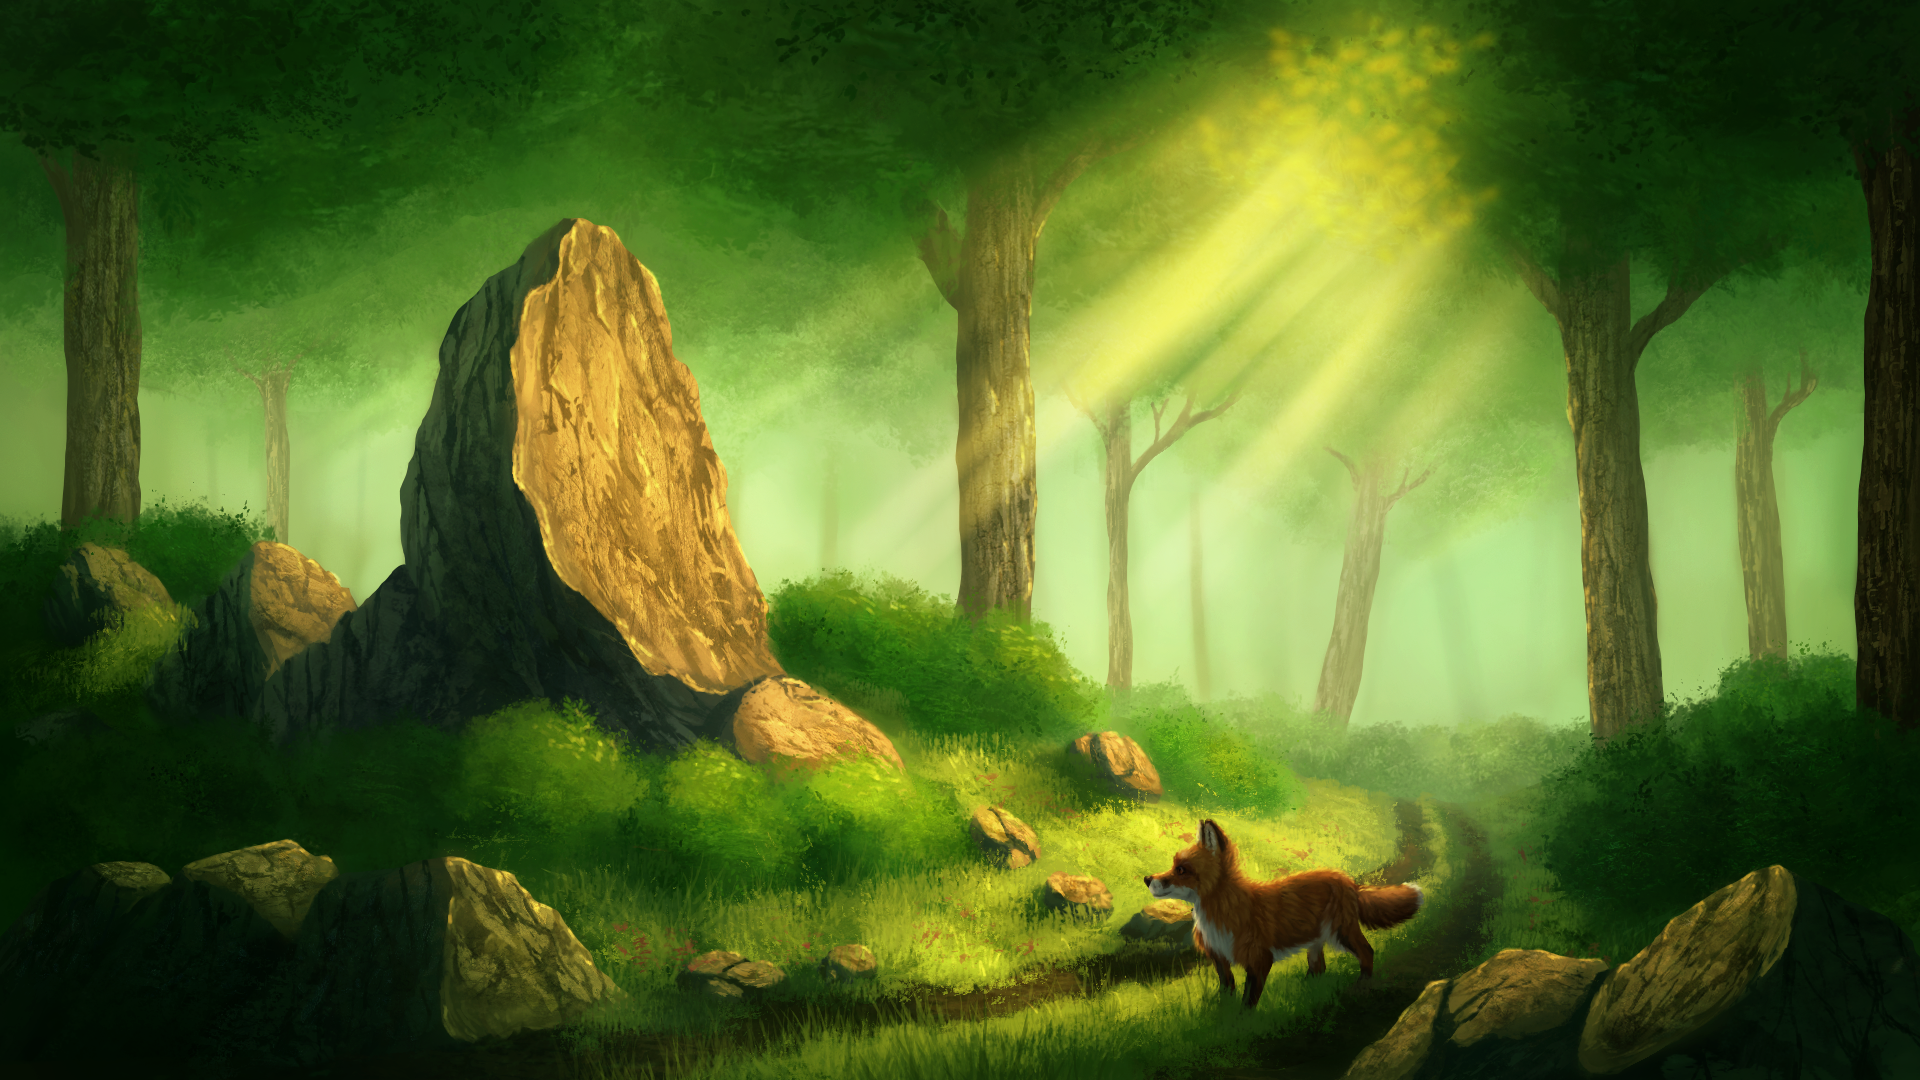 Landscape Digital Art Artwork Trees Forest Rock Animals Fox Grass Sun Rays Dappled Sunlight Fairy Ta 1920x1080